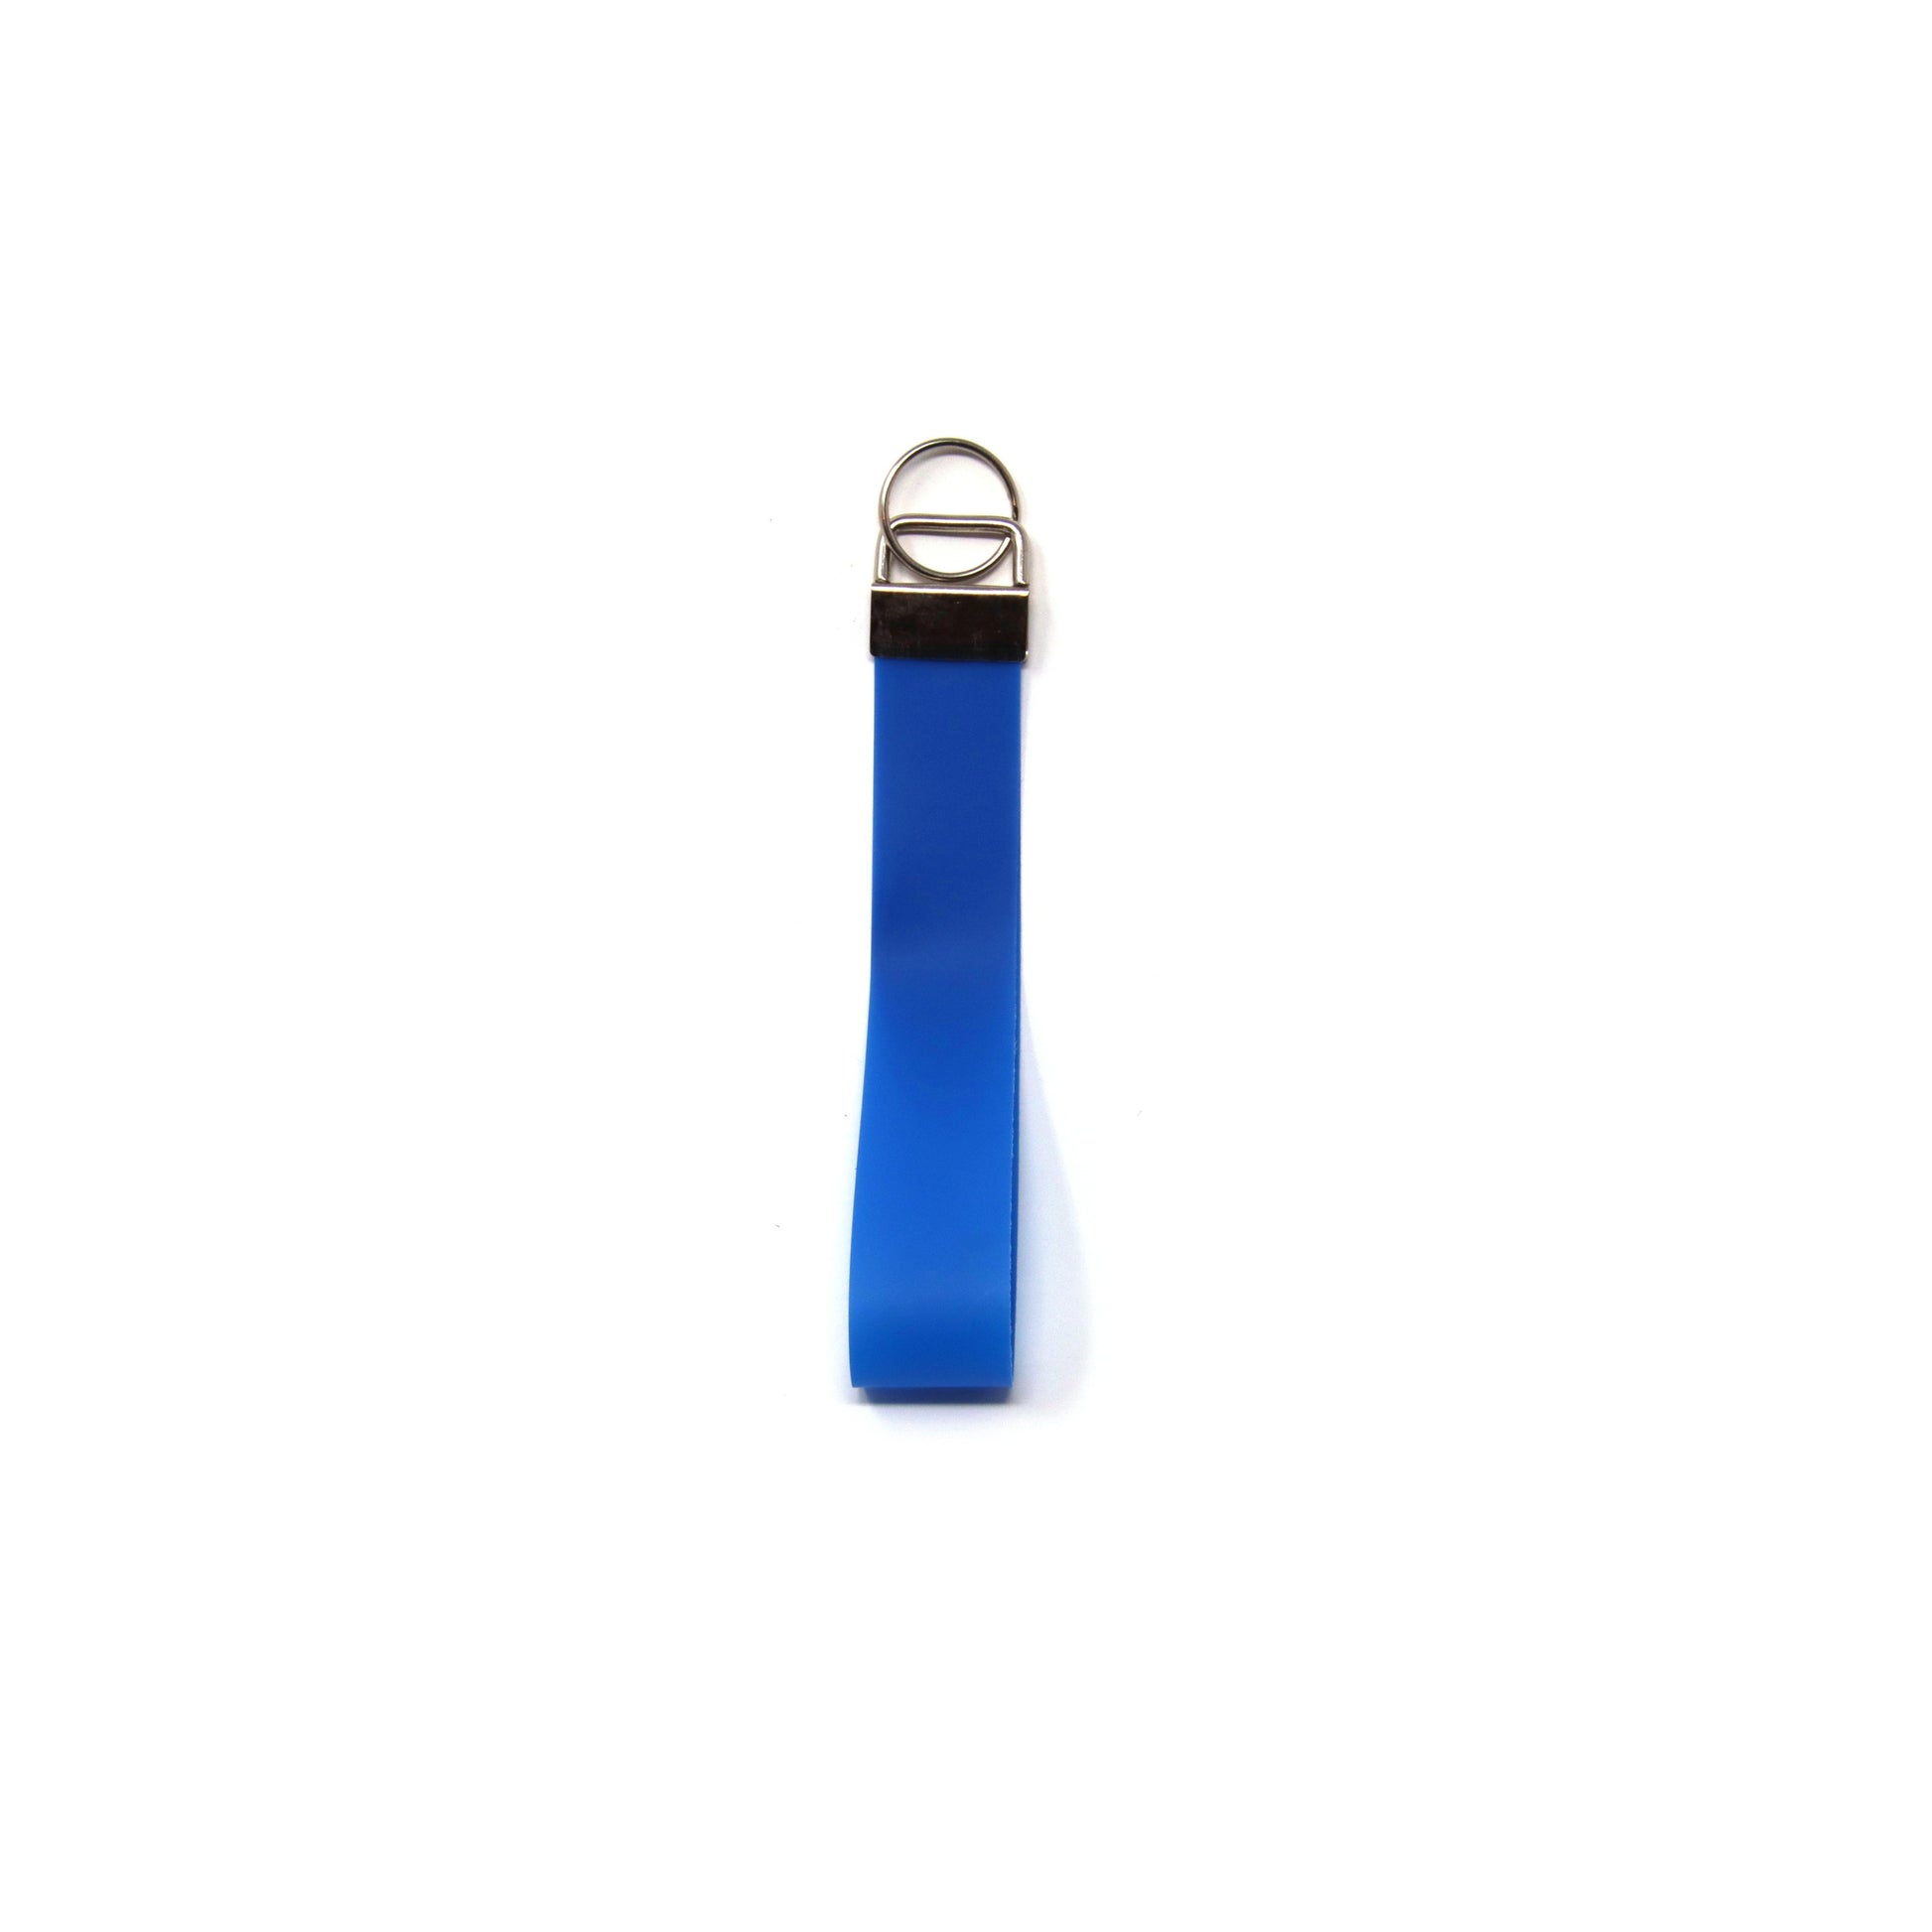 6 inch Blue Jelly Wristlet Key Chain